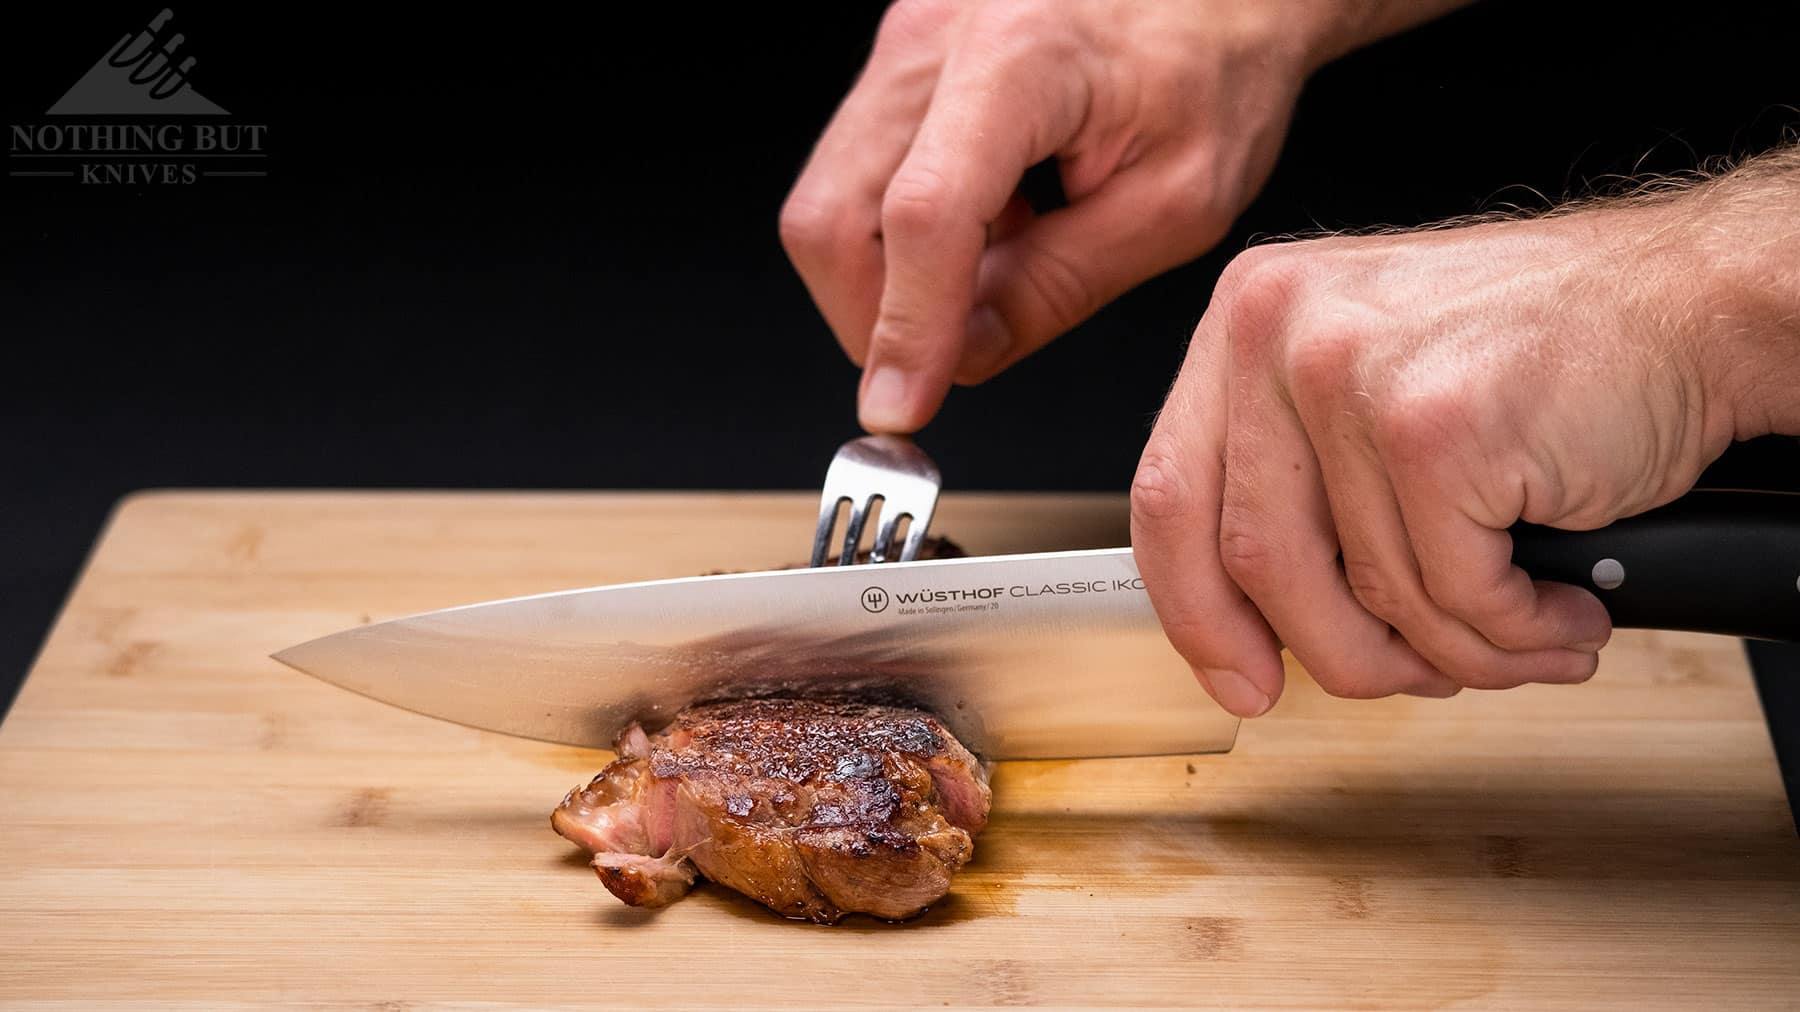 https://www.nothingbutknives.com/wp-content/uploads/2022/08/Wusthof-Classic-Ikon-Cutting-Meat.jpg